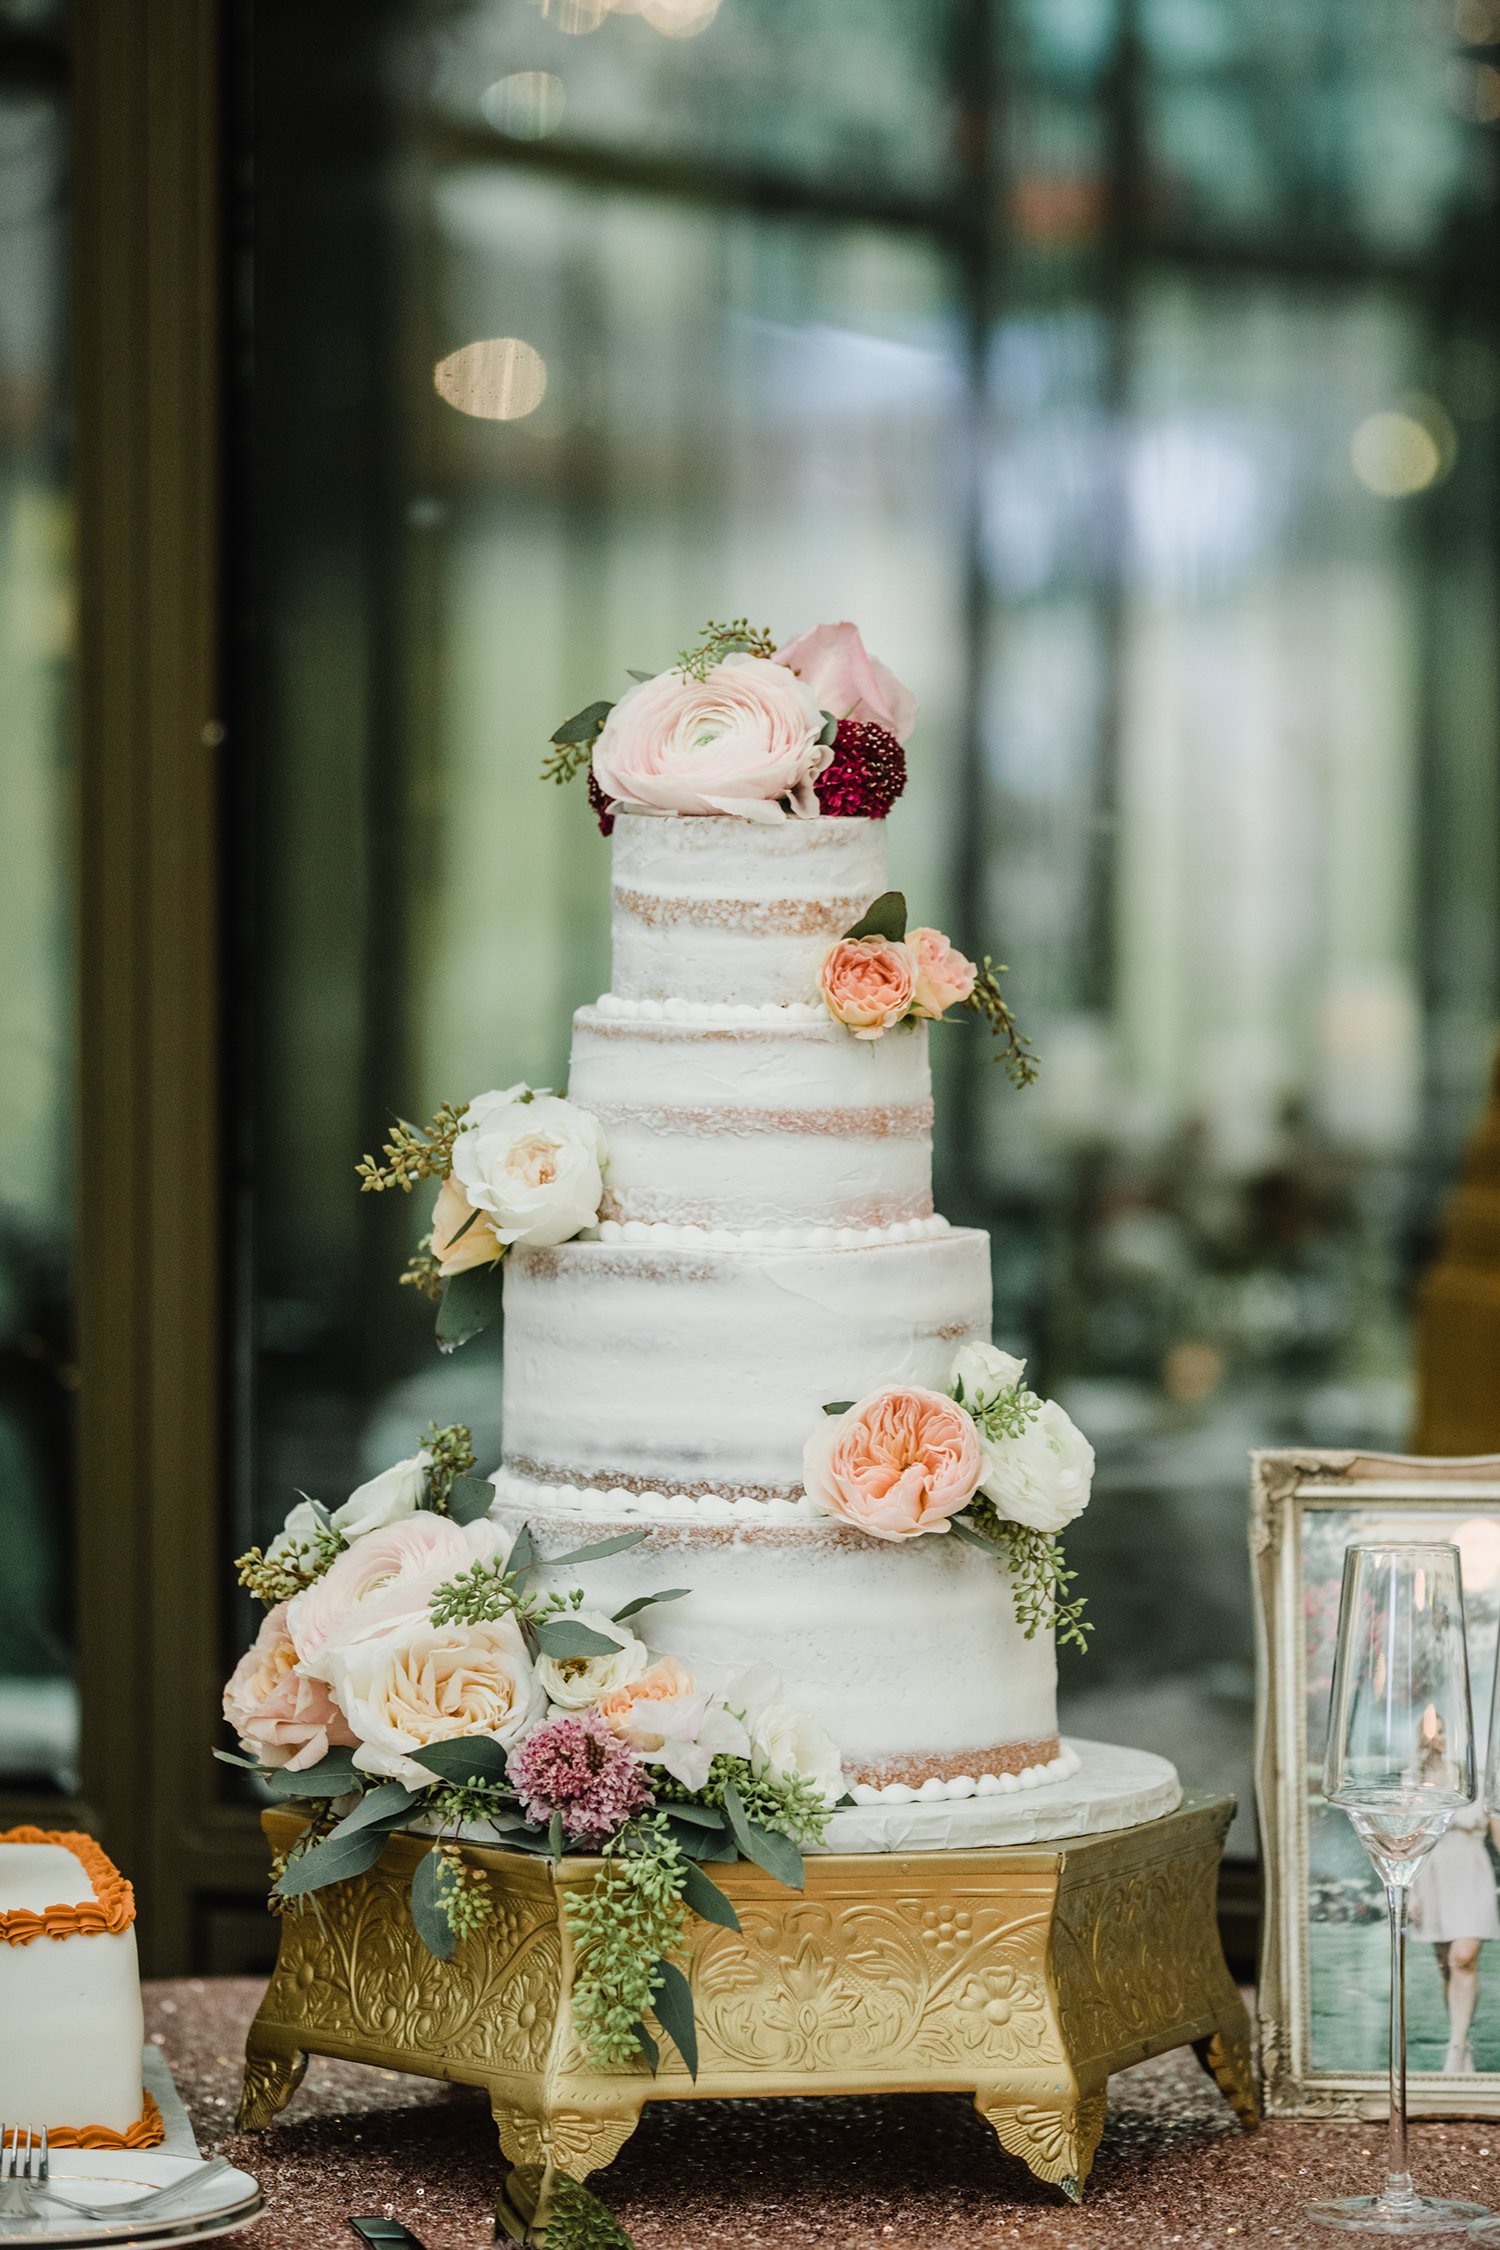 naked cake - custom wedding cakes in houston